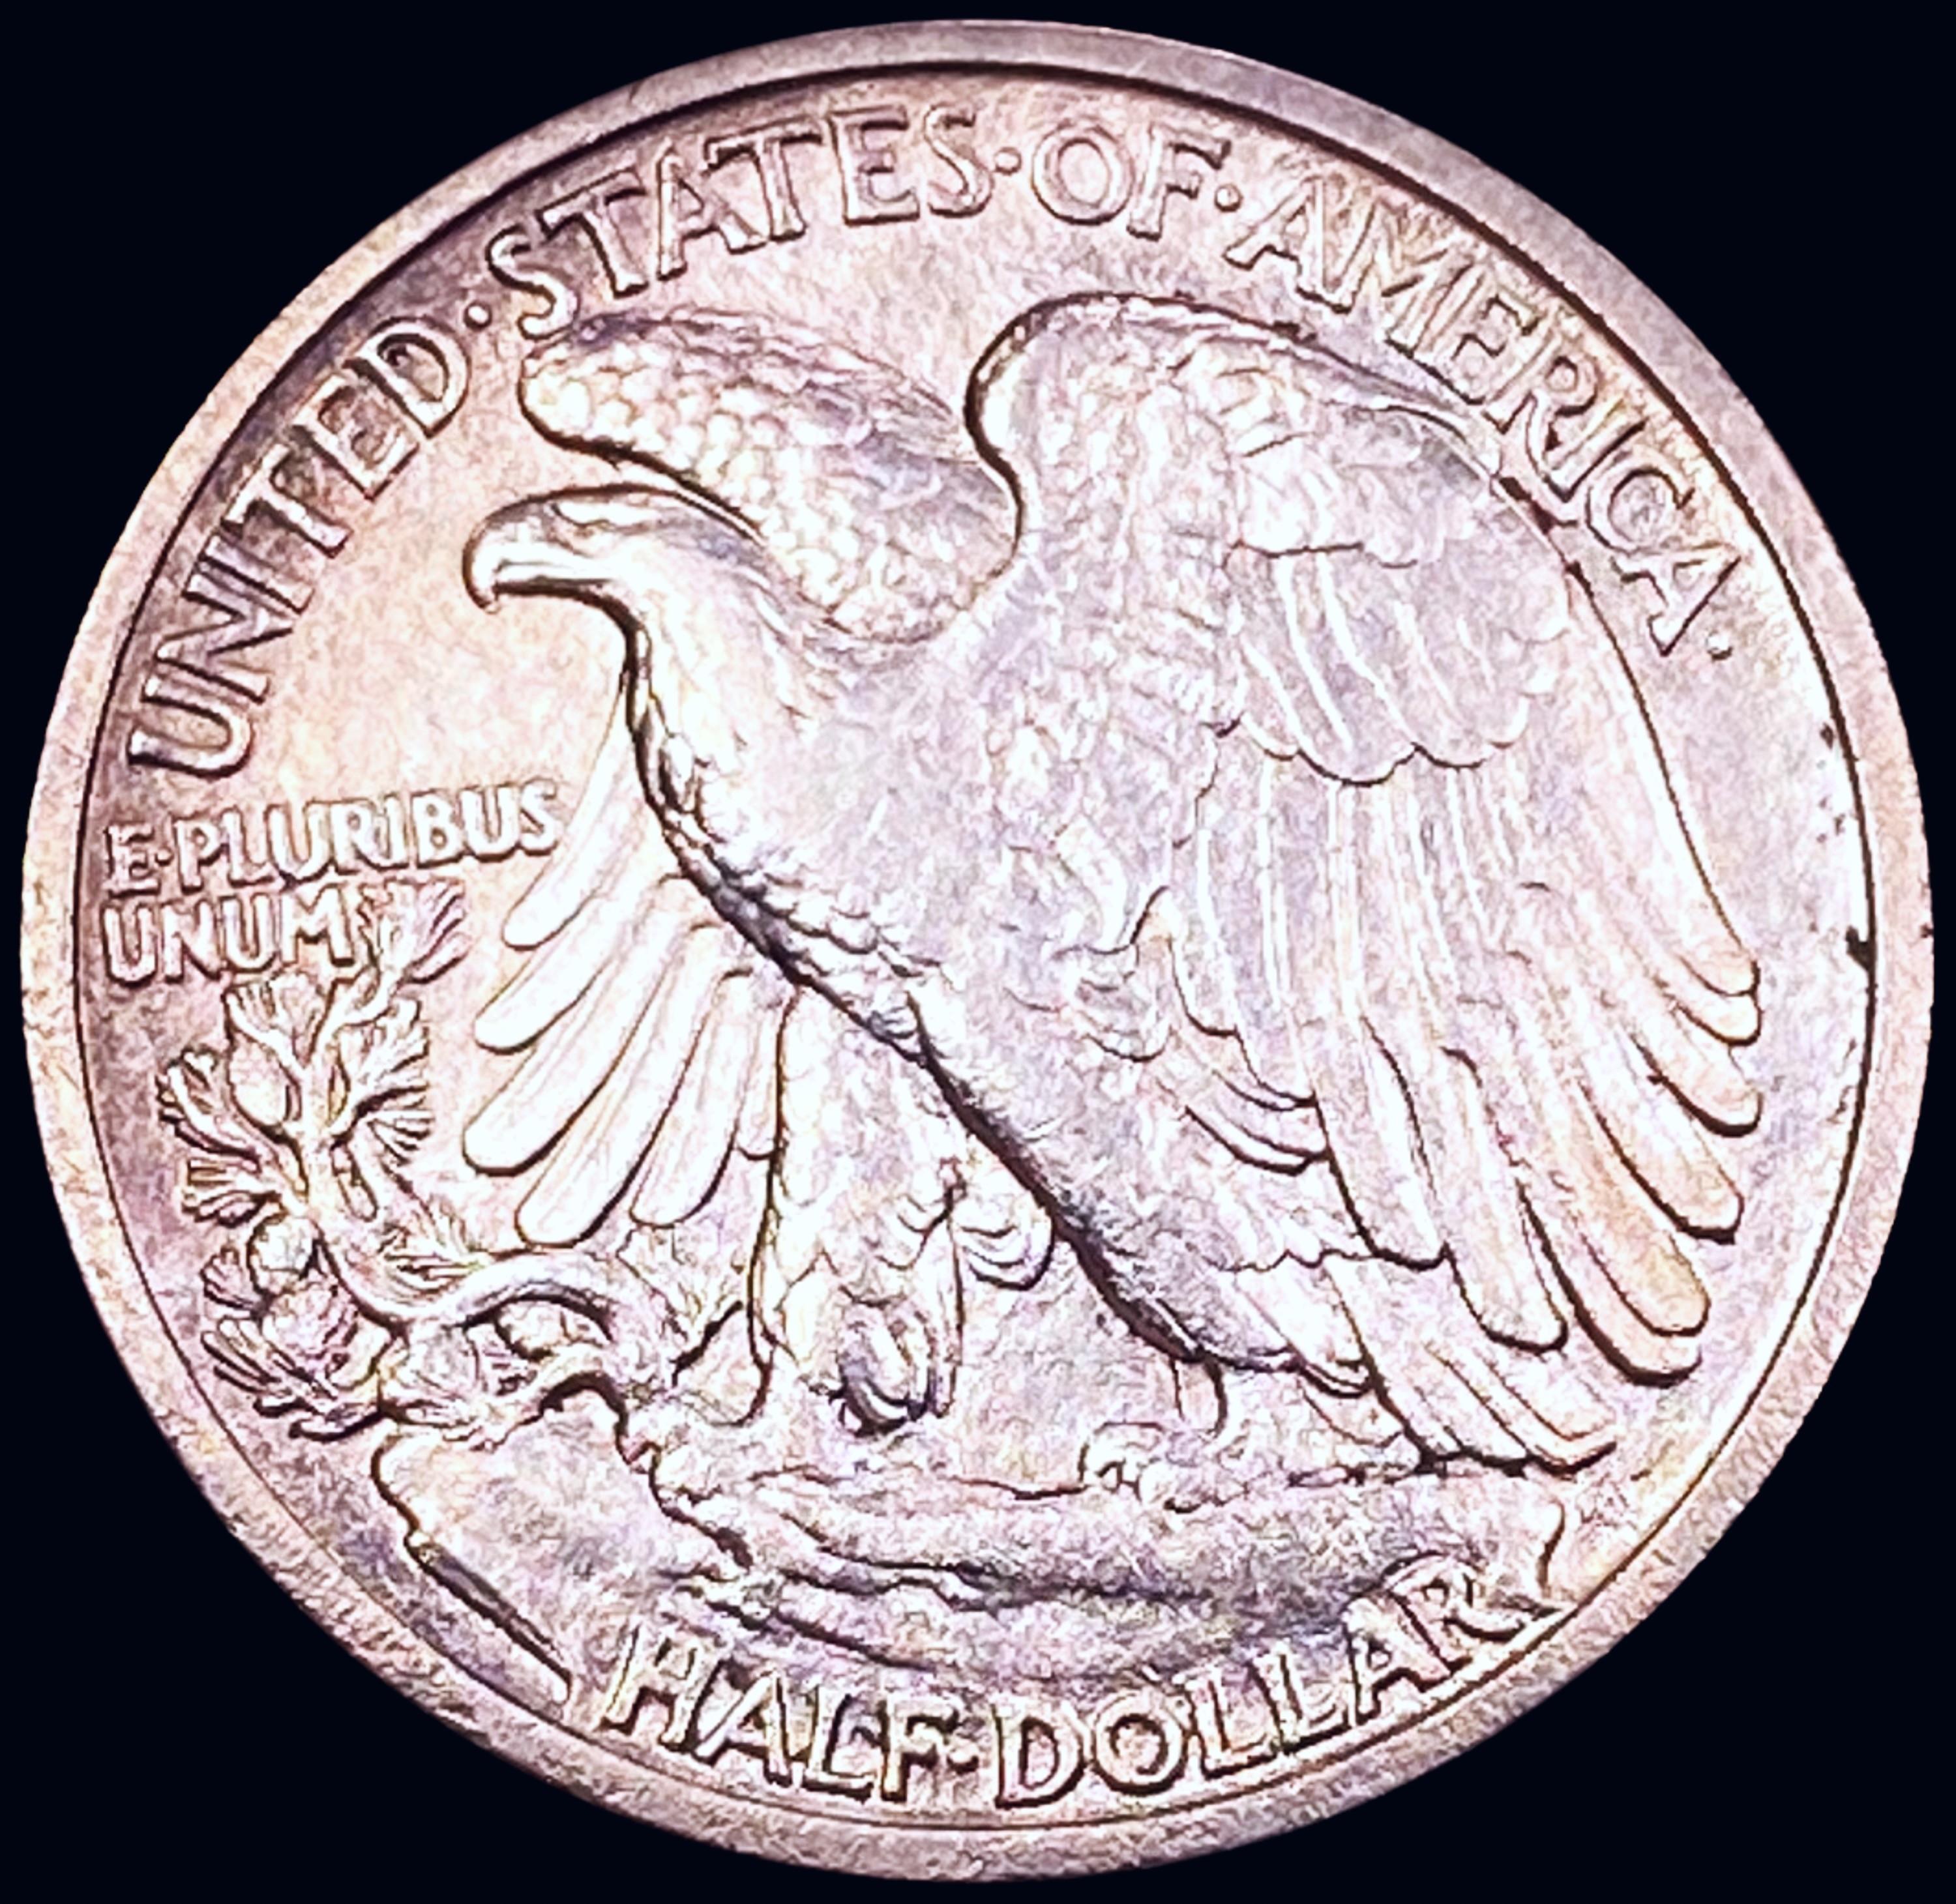 1917-S Obverse Walking Liberty Half Dollar CHOICE BU